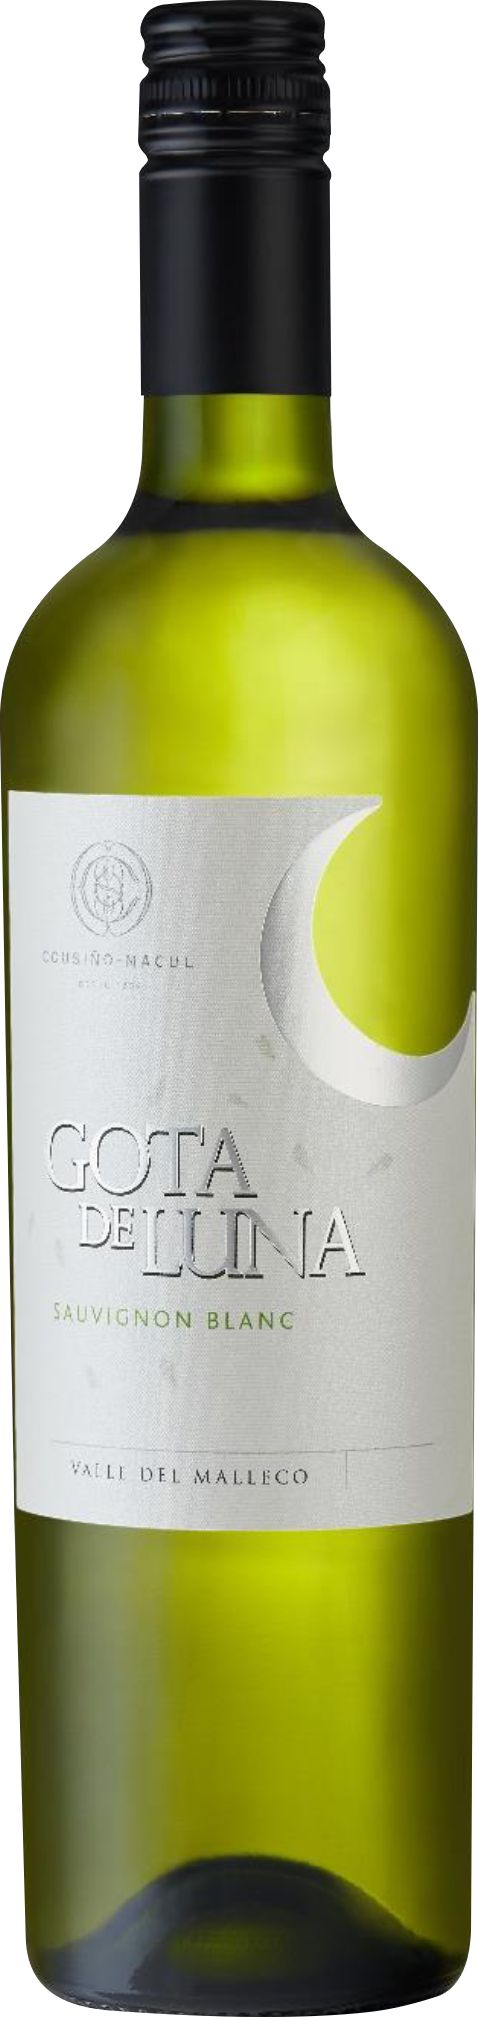 Cousino-Macul Sauvignon Blanc Gota De Luna 2017 750ml